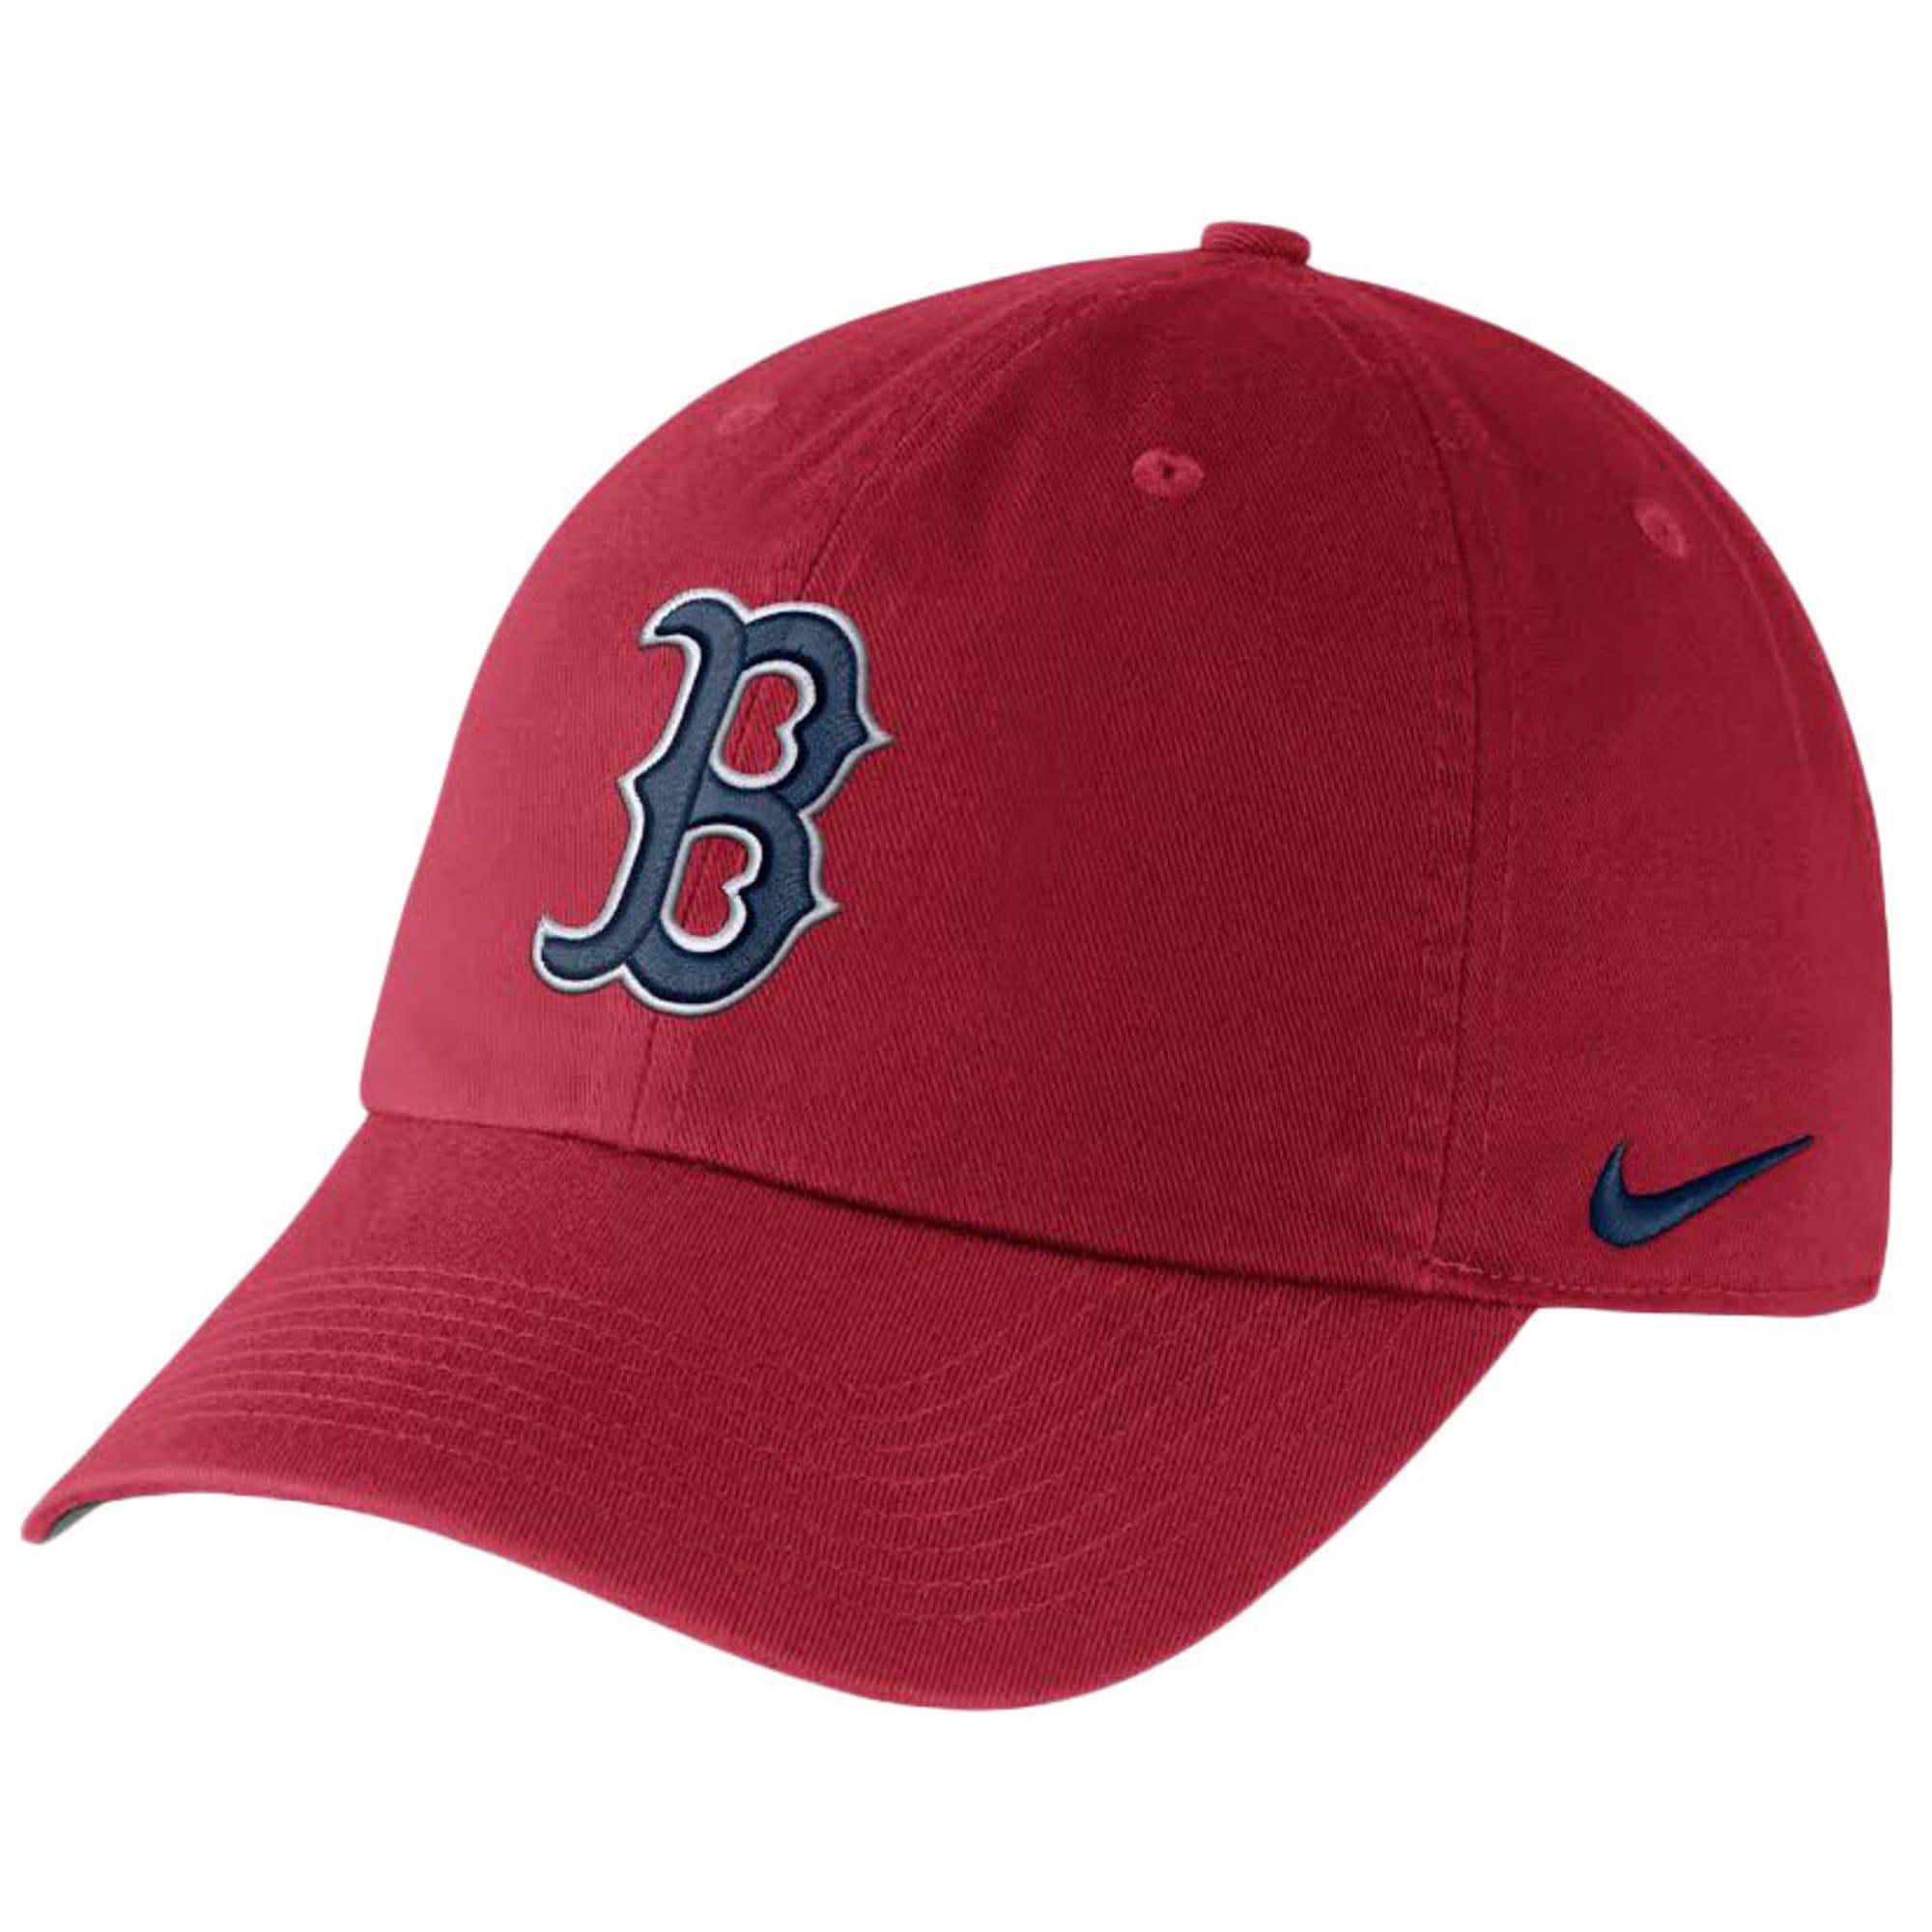 BOSTON RED SOX Men's Nike Swoosh Flex Hat - Bob's Stores